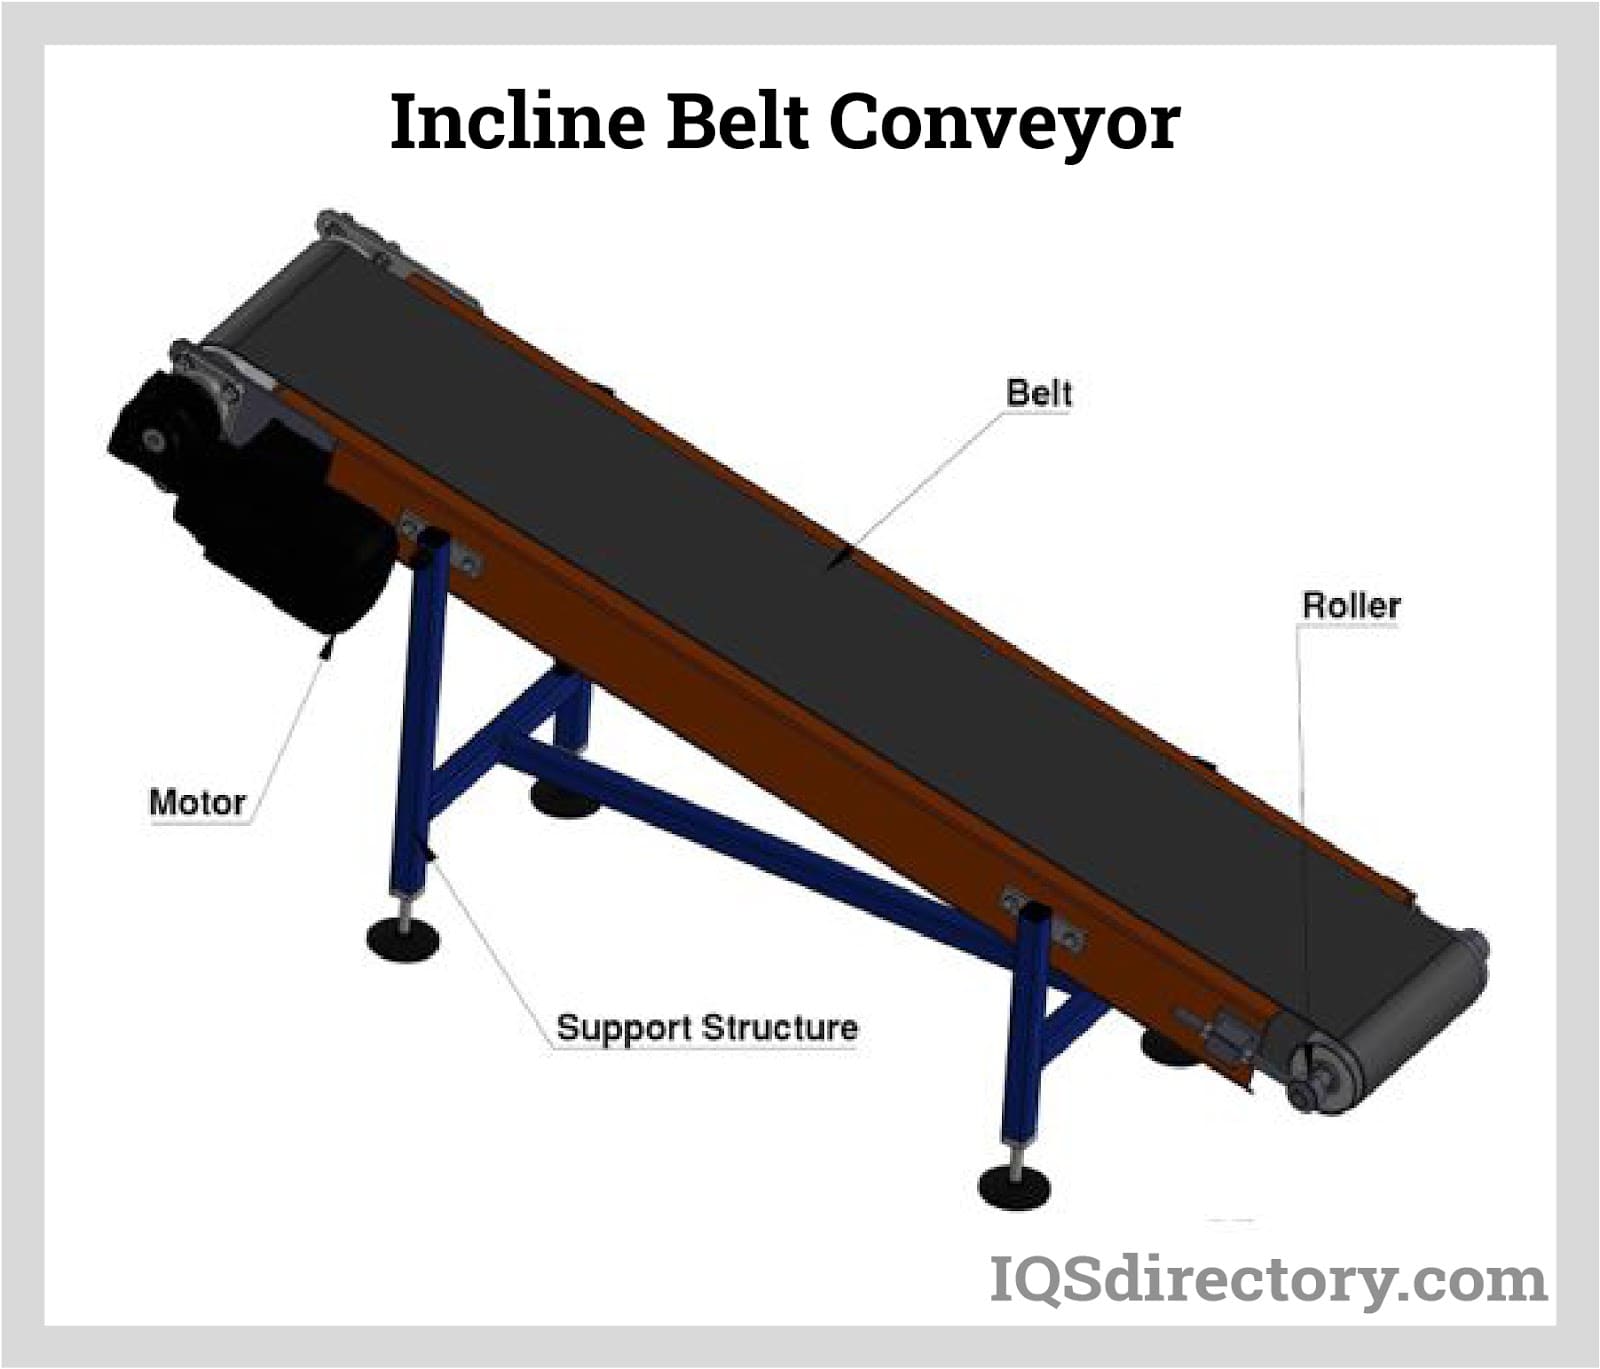 Incline Belt Conveyor